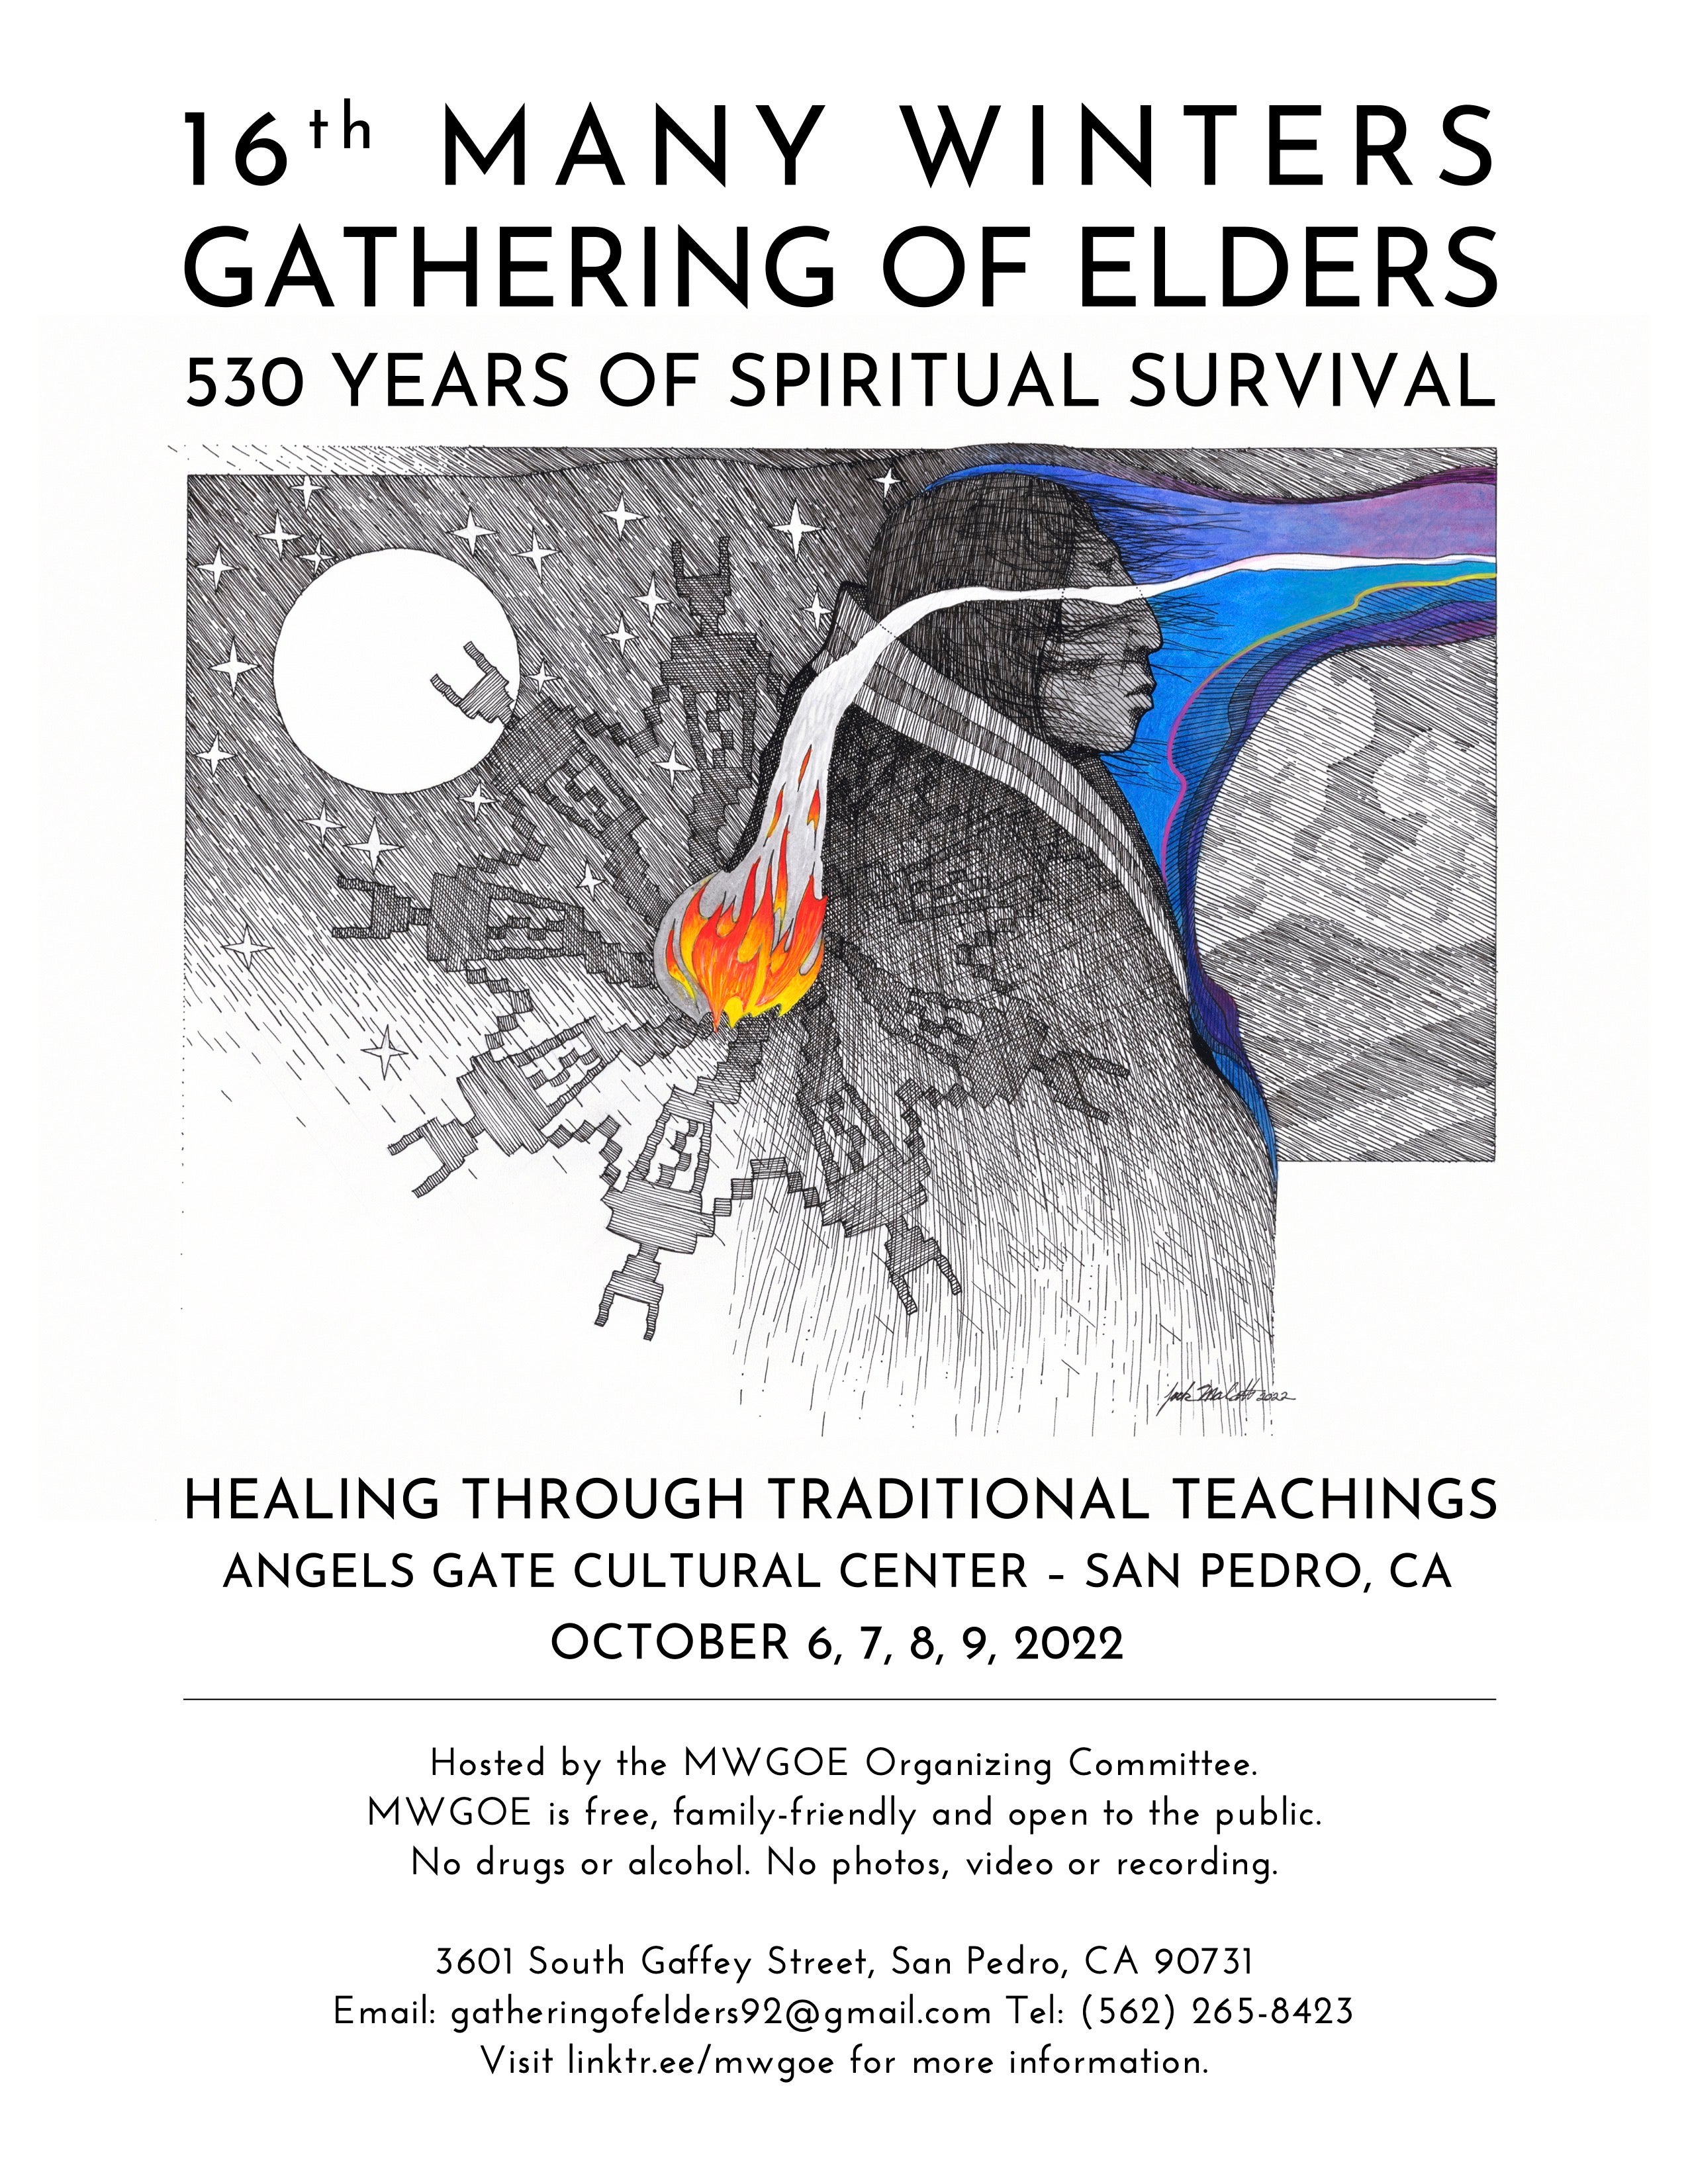 16th Annual Many Winters Gathering Of Elders 로스앤젤레스관광청 